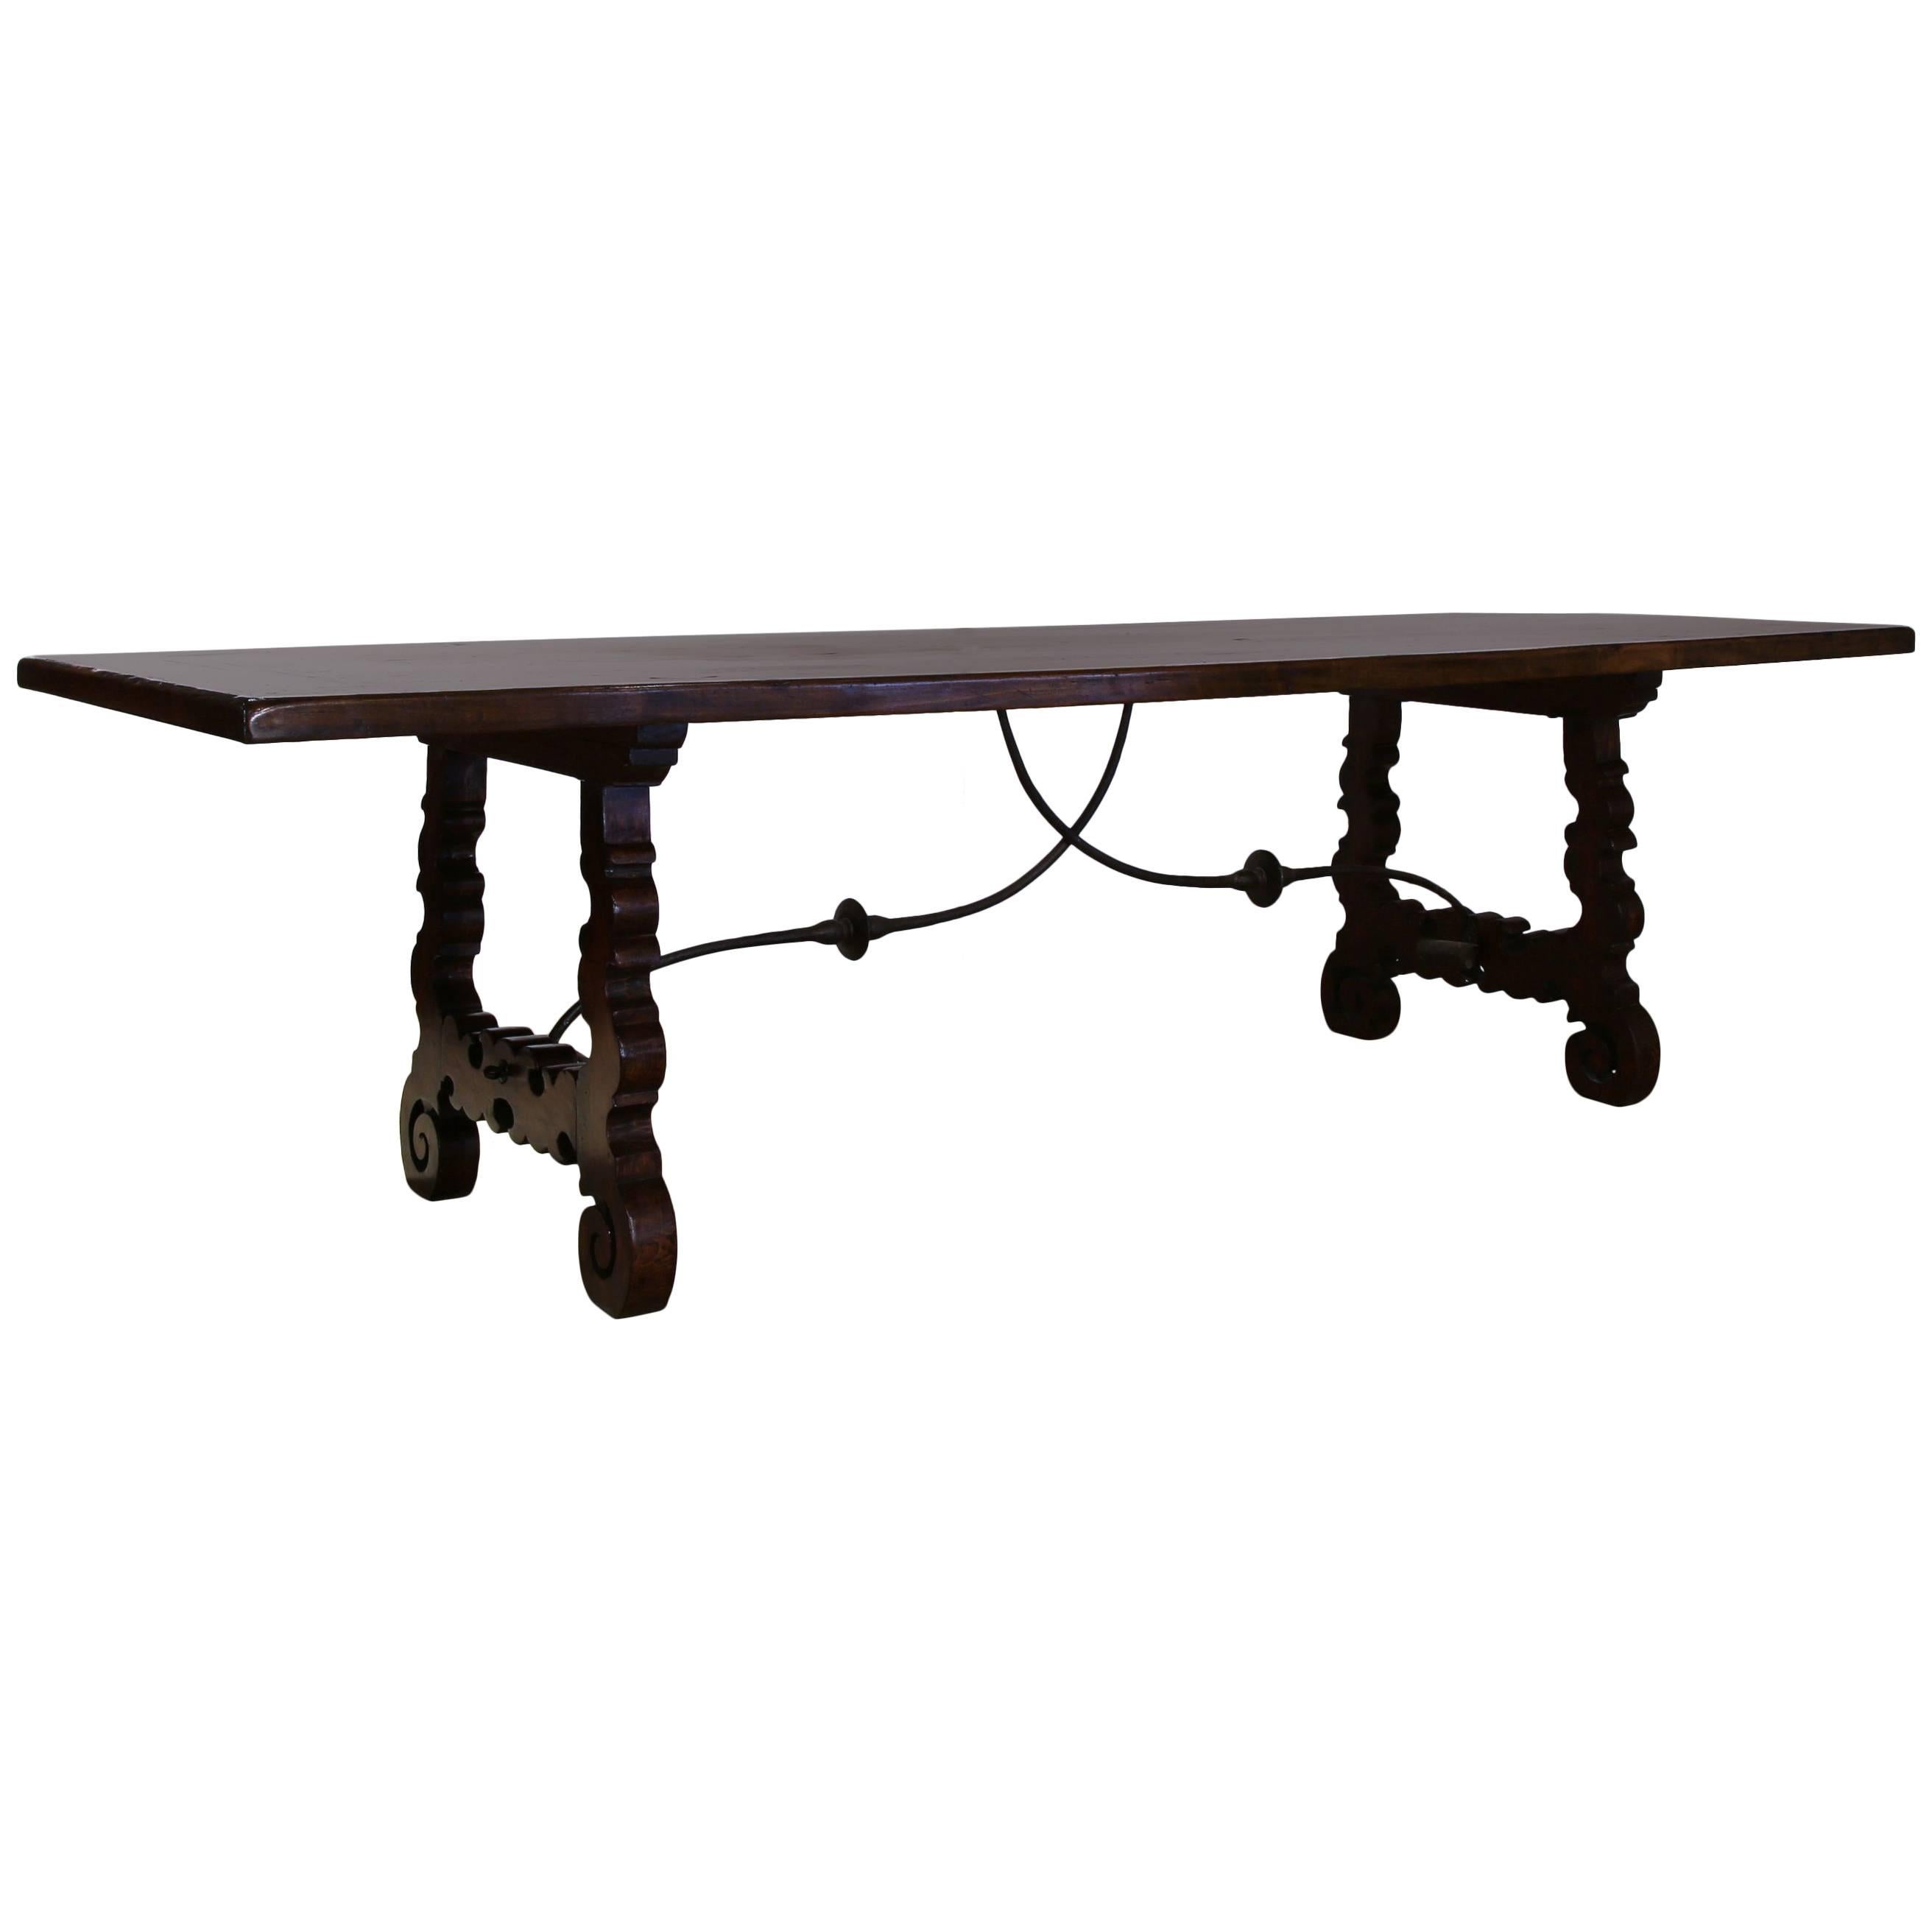 Large 19th Century Spanish Walnut Farm Table with Iron Stretcher